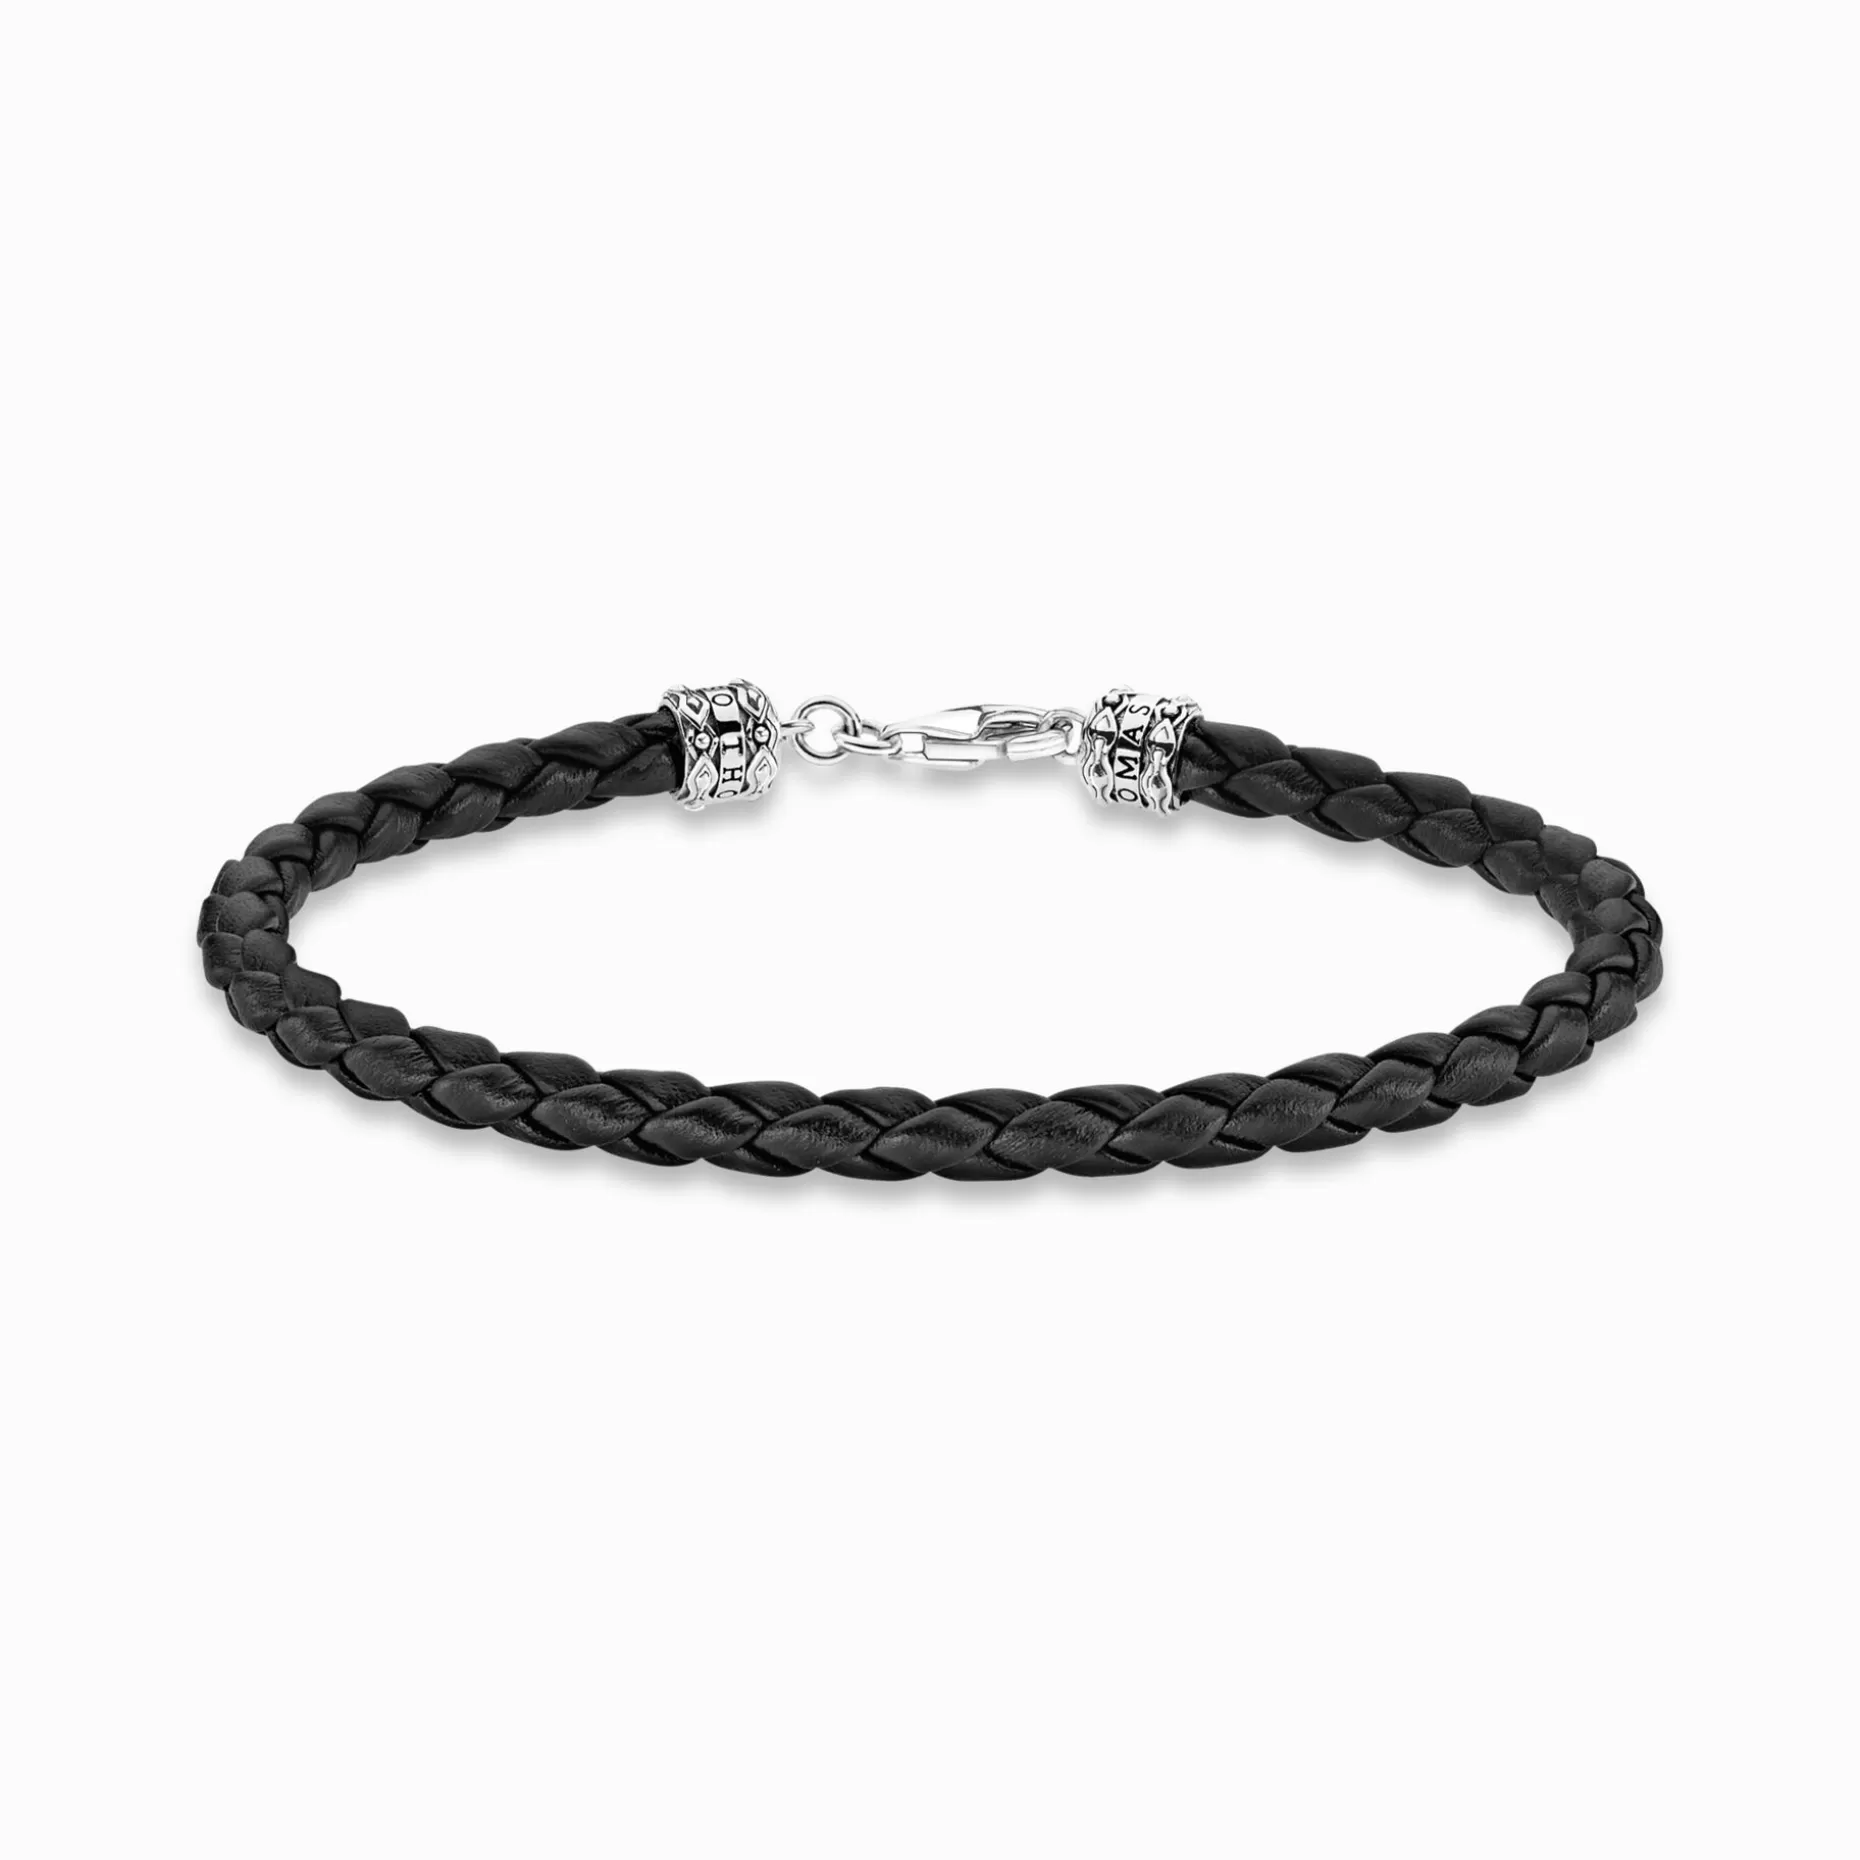 THOMAS SABO Leather bracelet black silver-coloured, black New